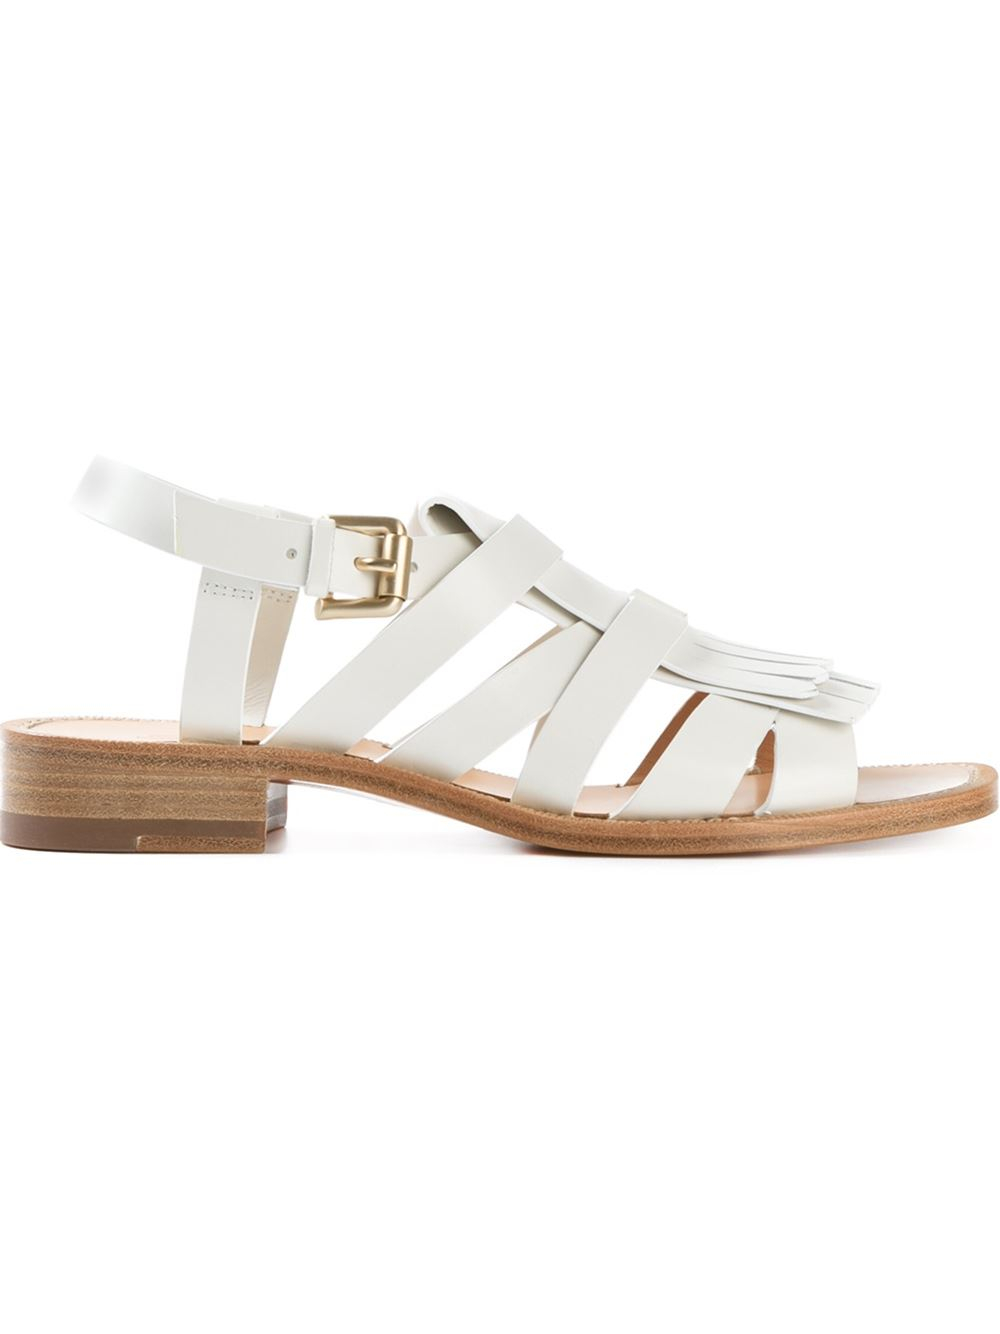 Santoni Tassel Buckle Sandals in White | Lyst